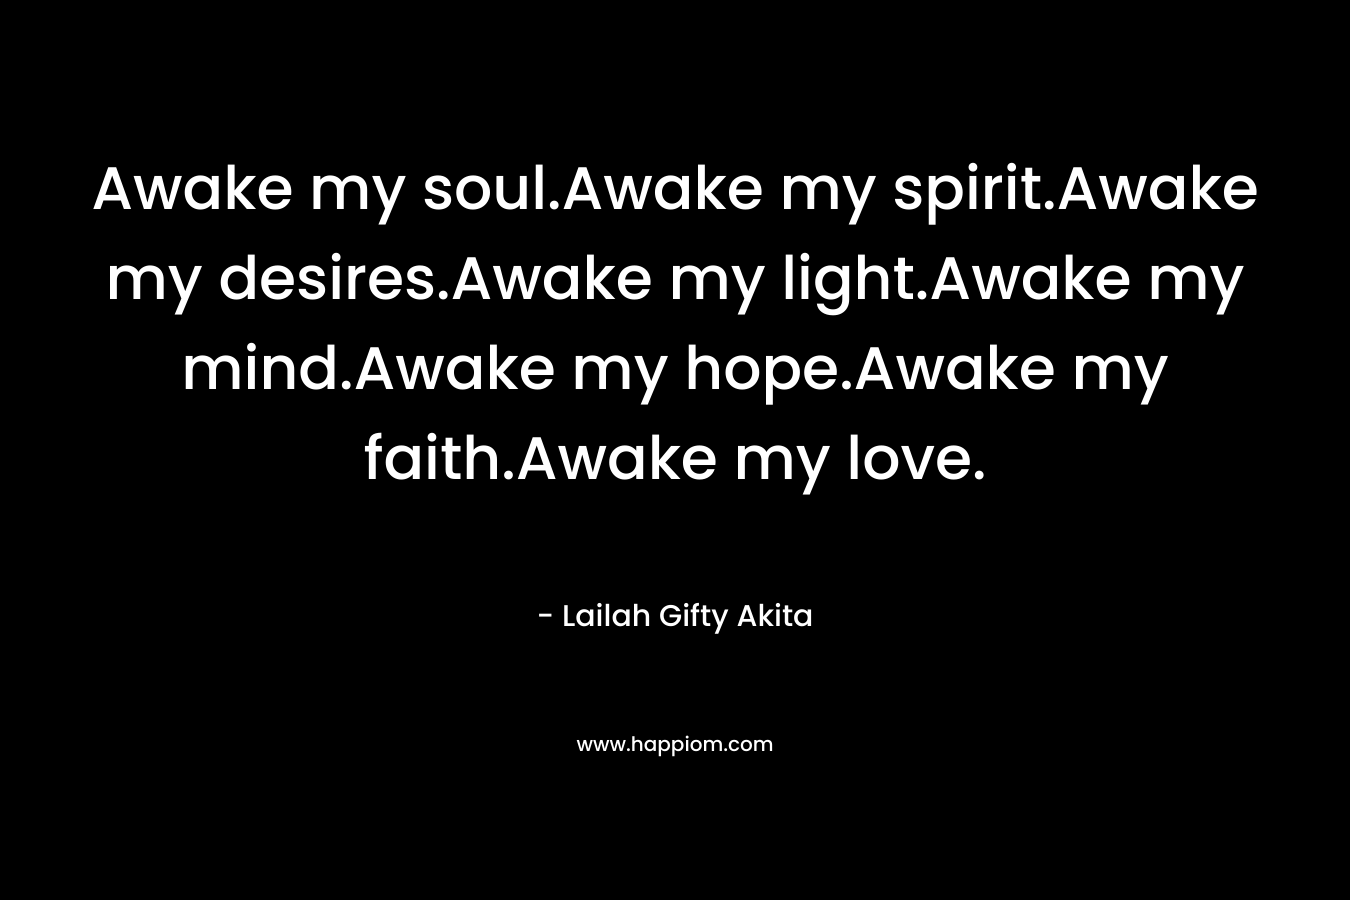 Awake my soul.Awake my spirit.Awake my desires.Awake my light.Awake my mind.Awake my hope.Awake my faith.Awake my love.